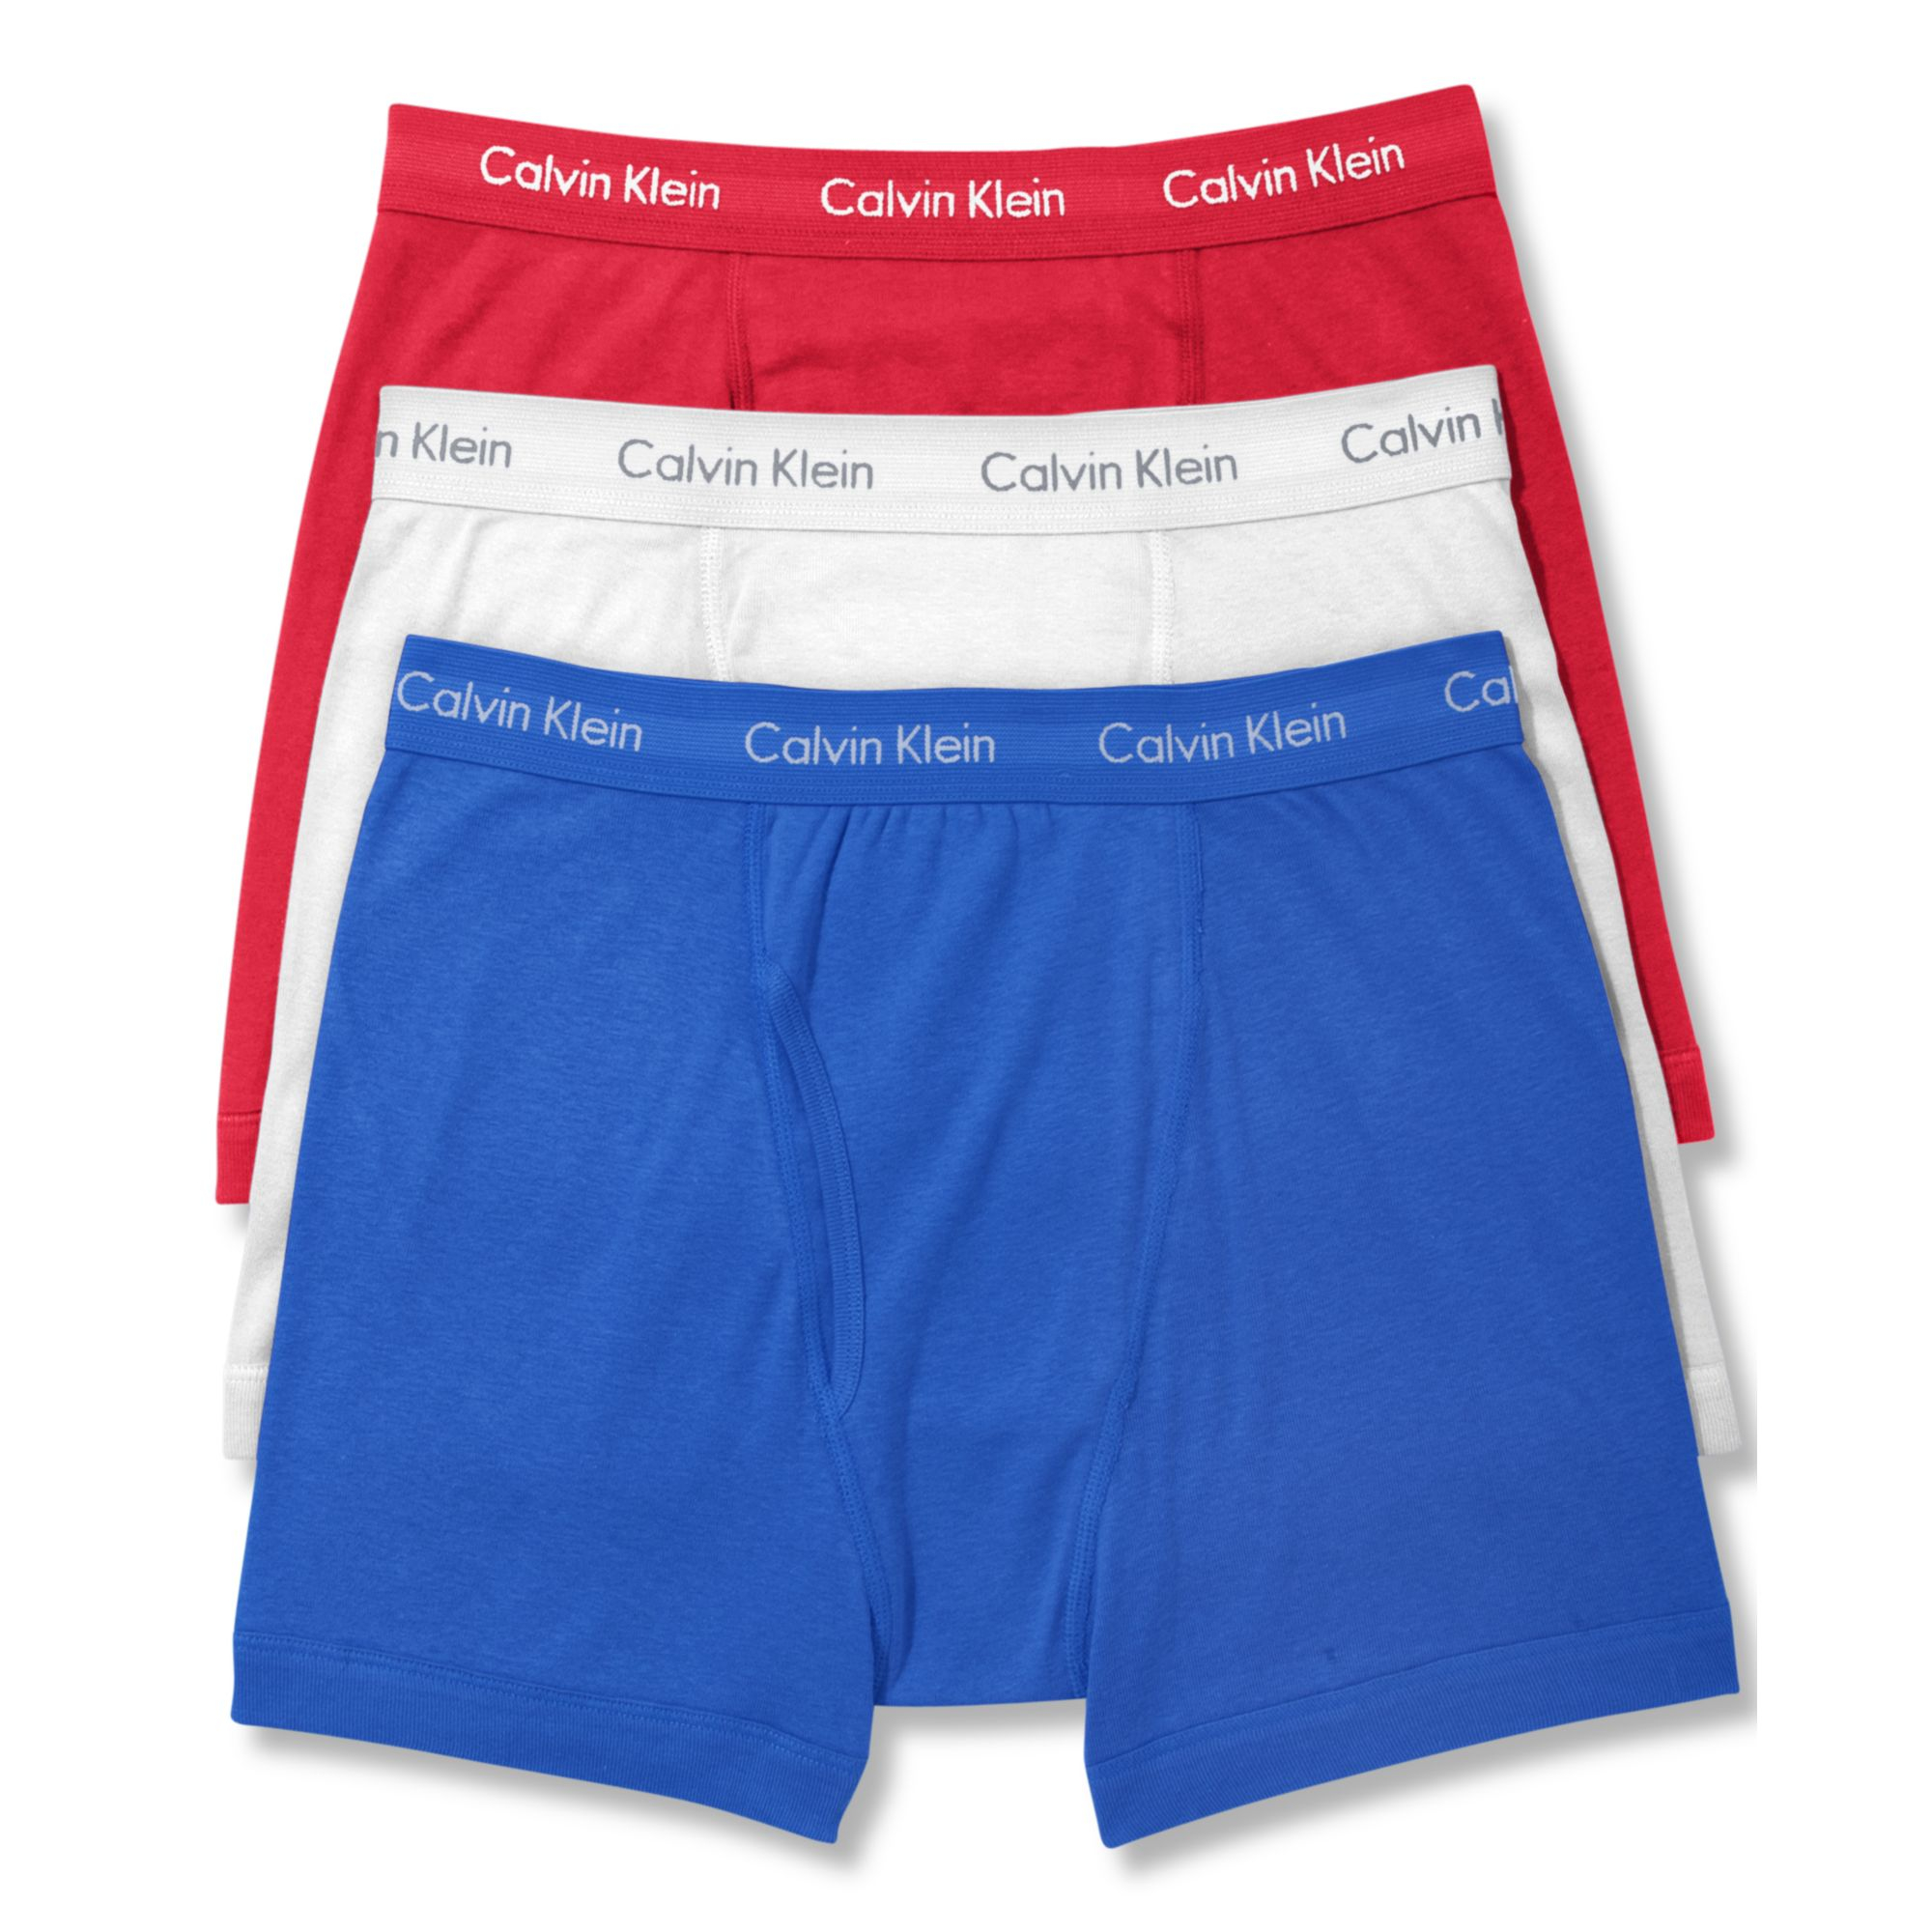 Calvin Klein American Icon Cotton Basic Boxer Brief 3 Pack in ...